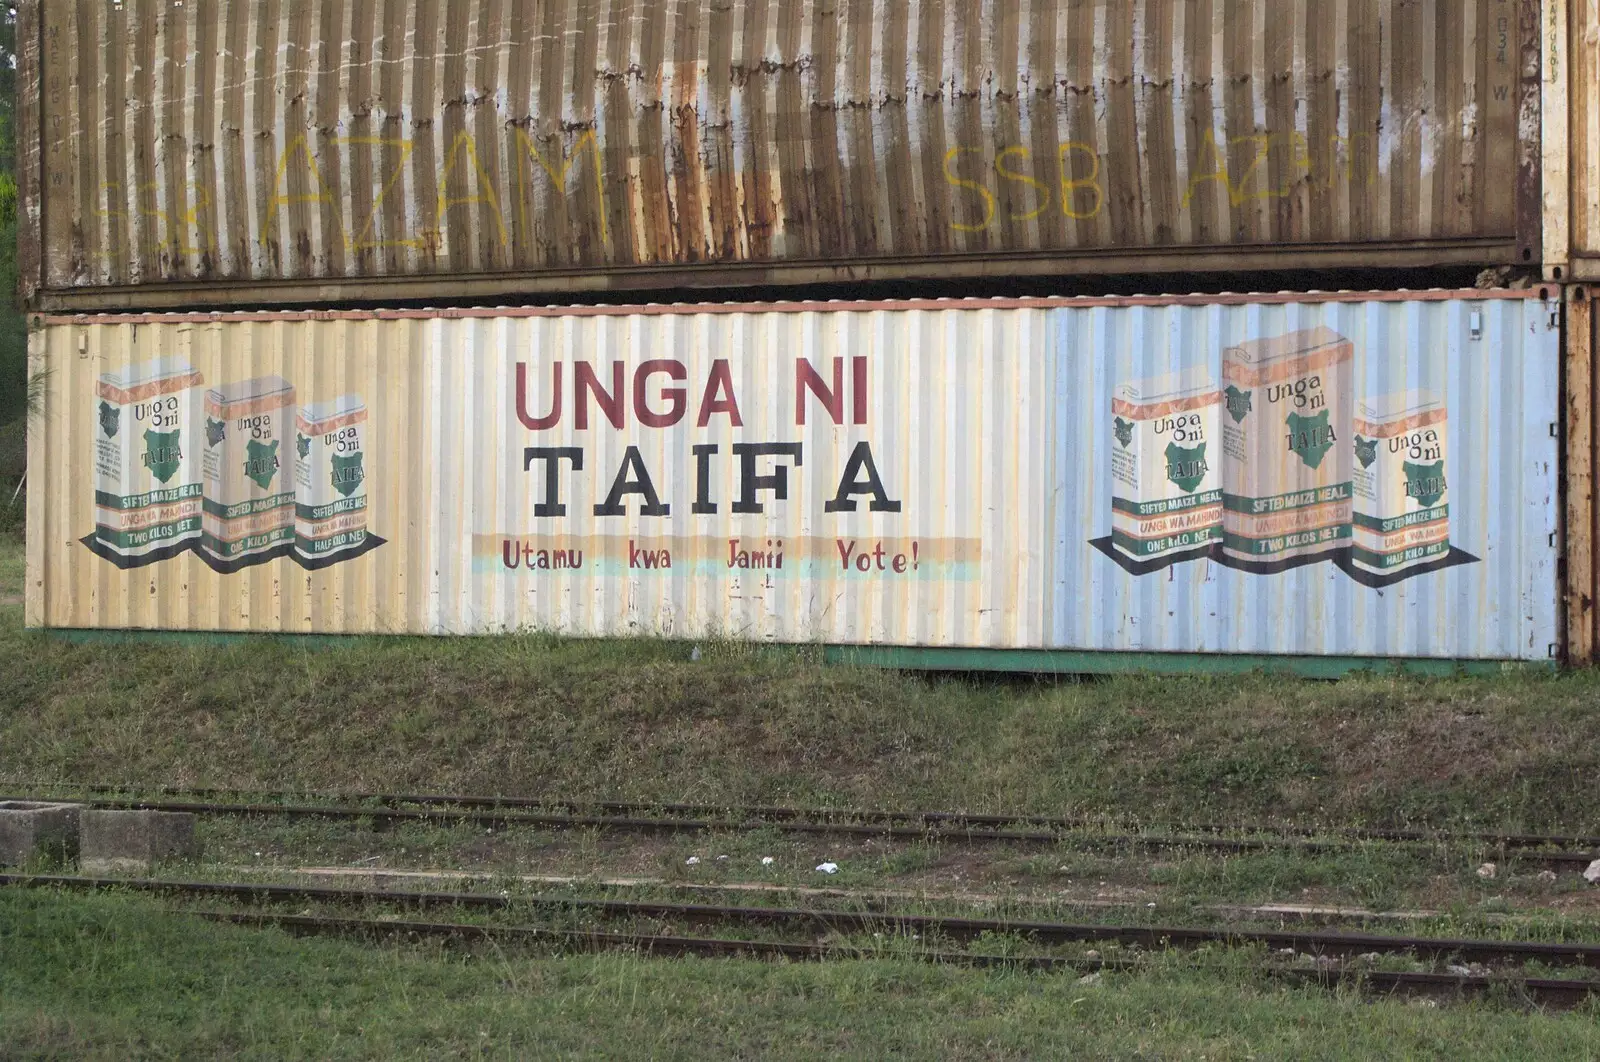 Adverts on corrugated iron, from Long Train (not) Runnin': Tiwi Beach, Mombasa, Kenya - 7th November 2010